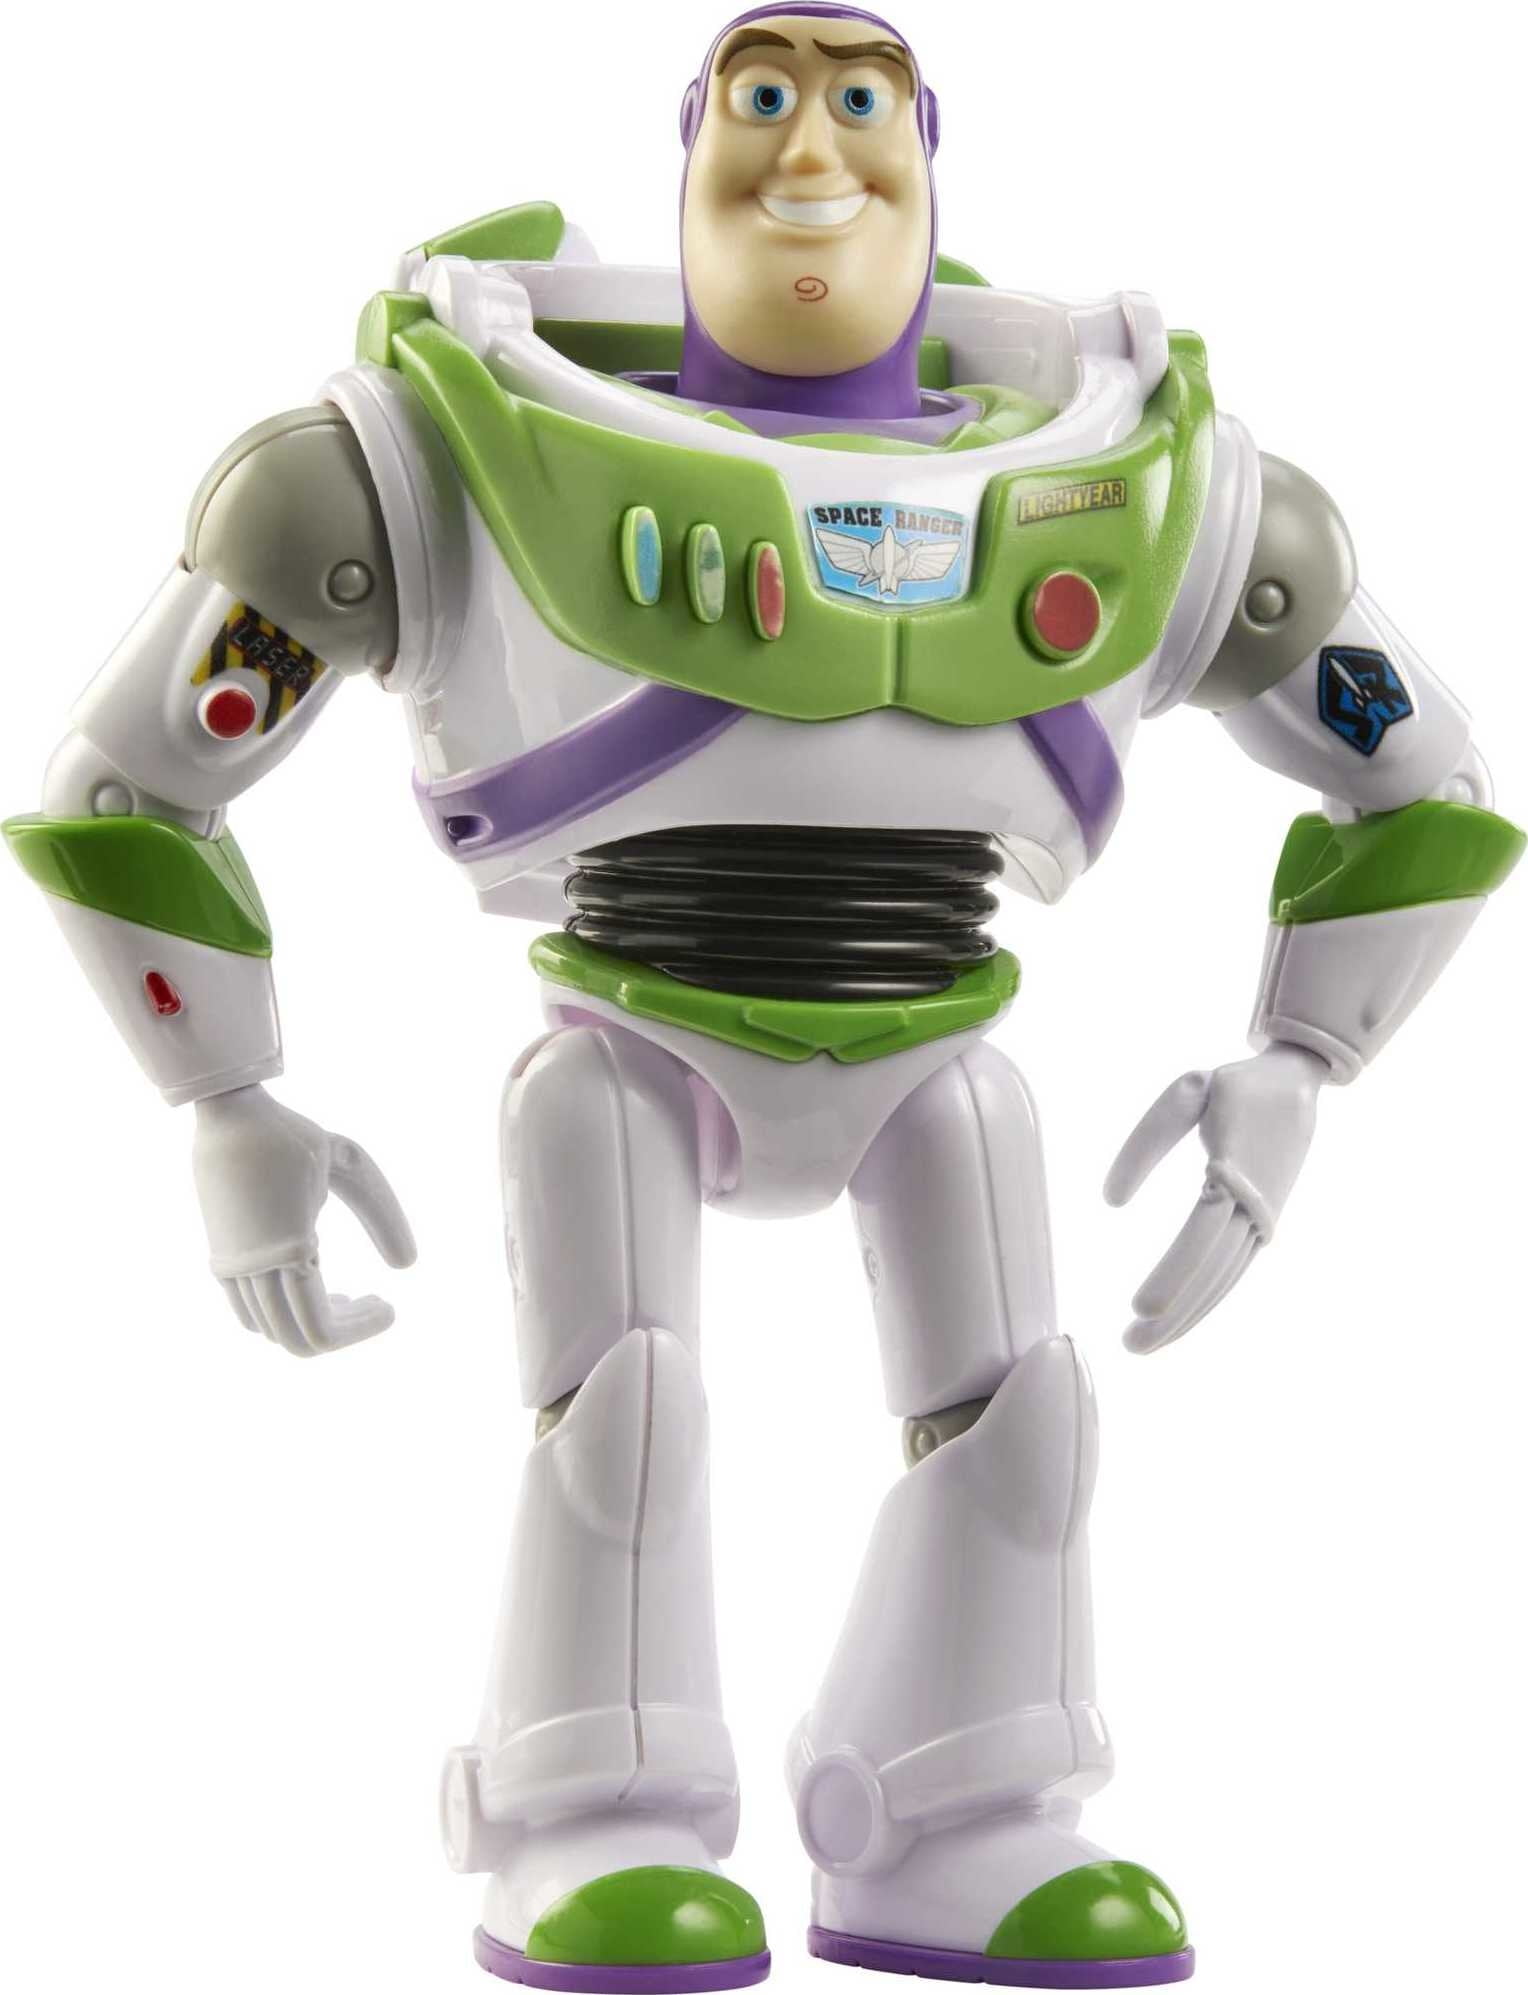 Disney GGJ89 Pixar Toy Story 4 Benson and Woody Figure Toys for